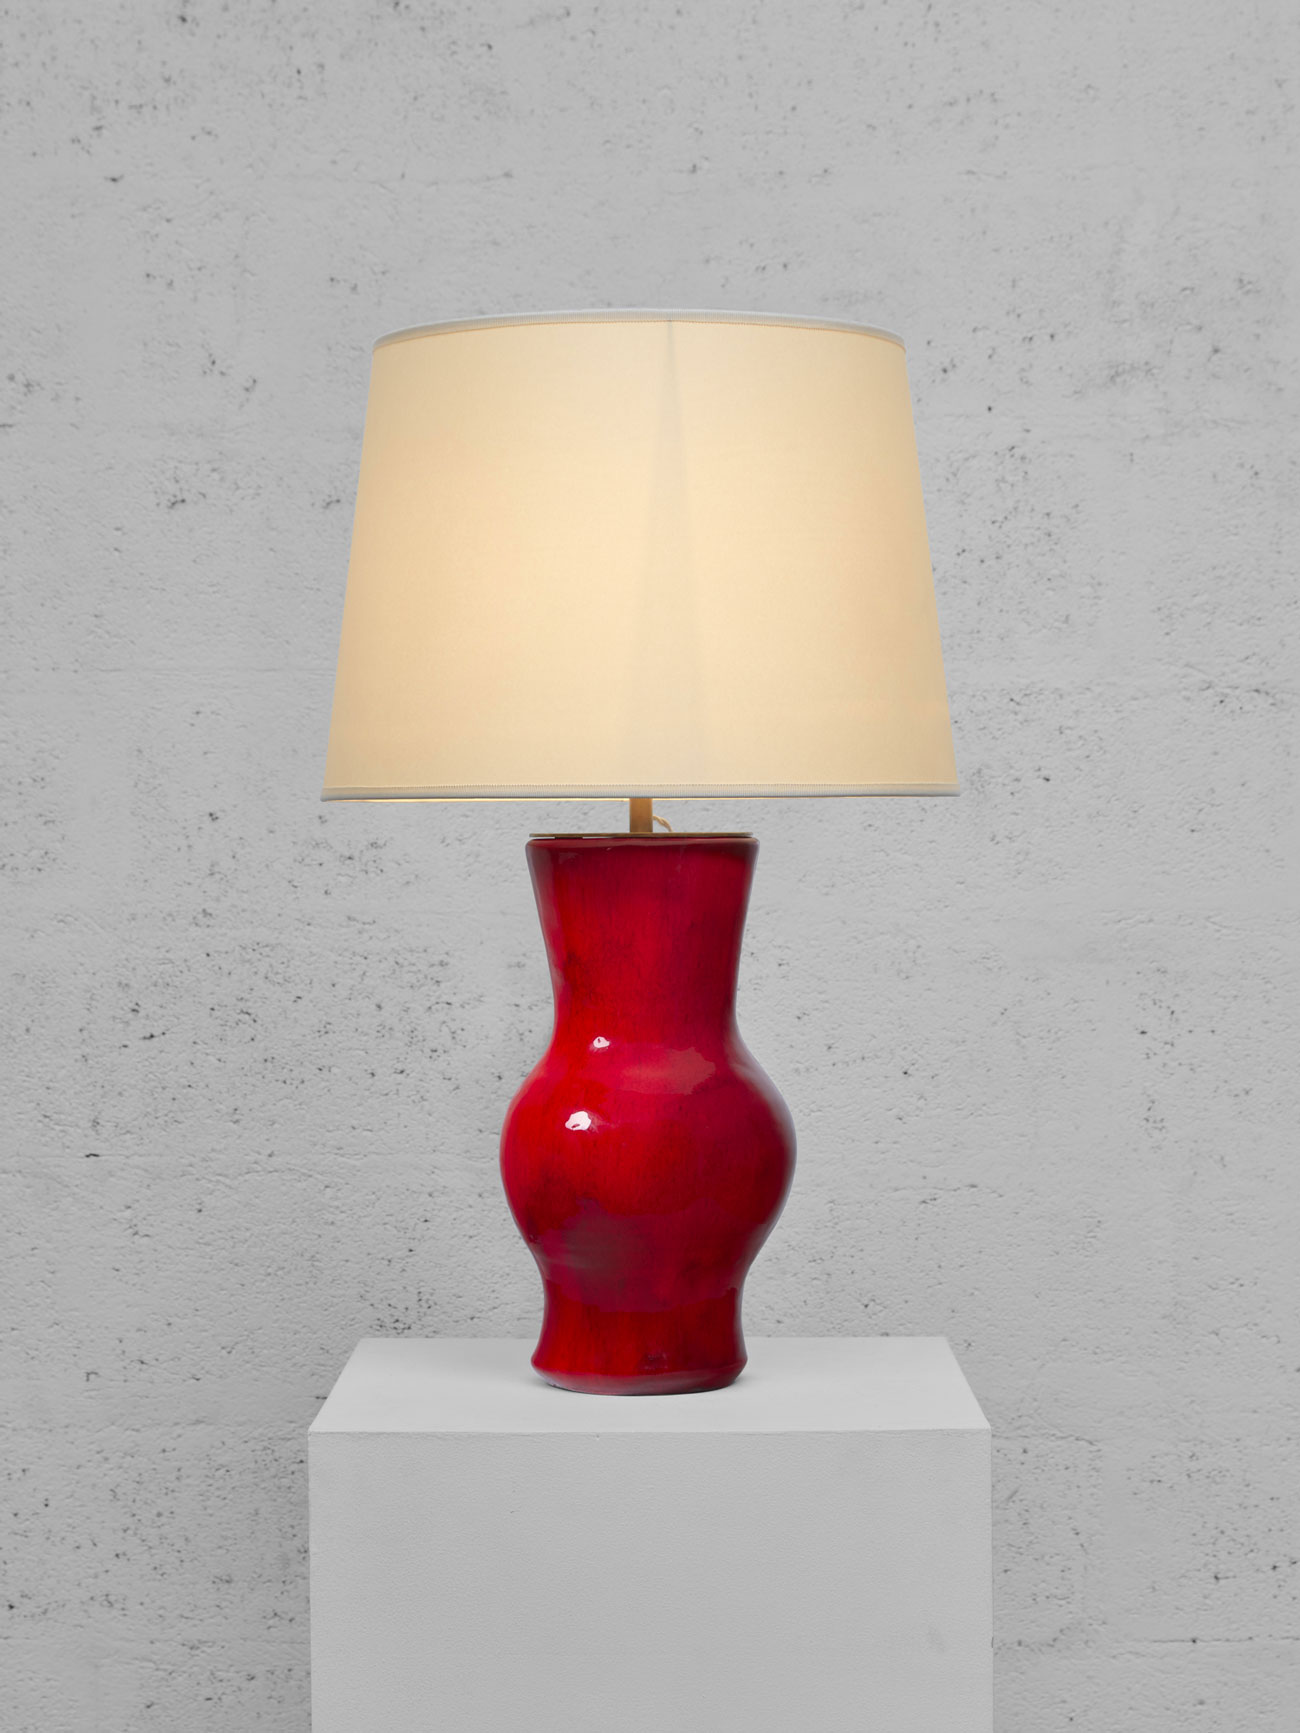 Robert & Jean Cloutier, Vase «Gigi» transformed in lamp, vue 01